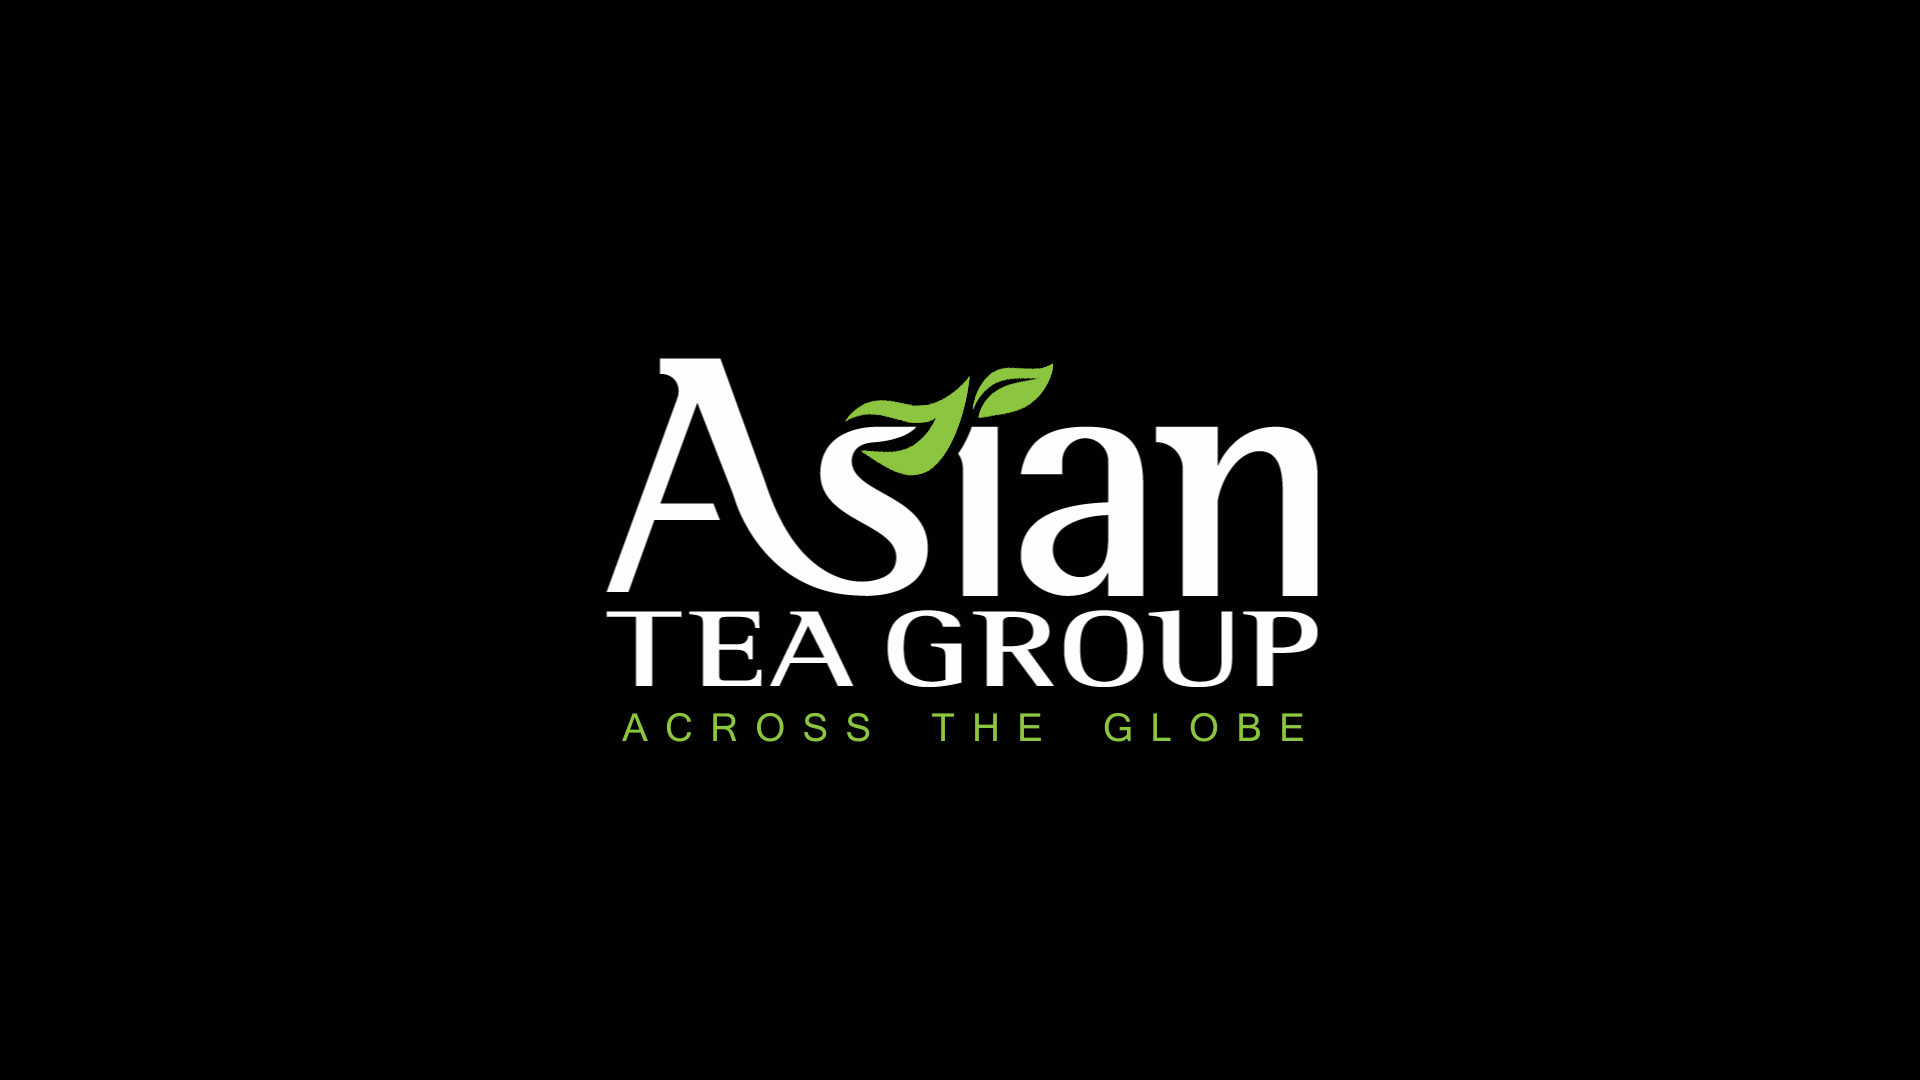 ASIAN TEA LOGO